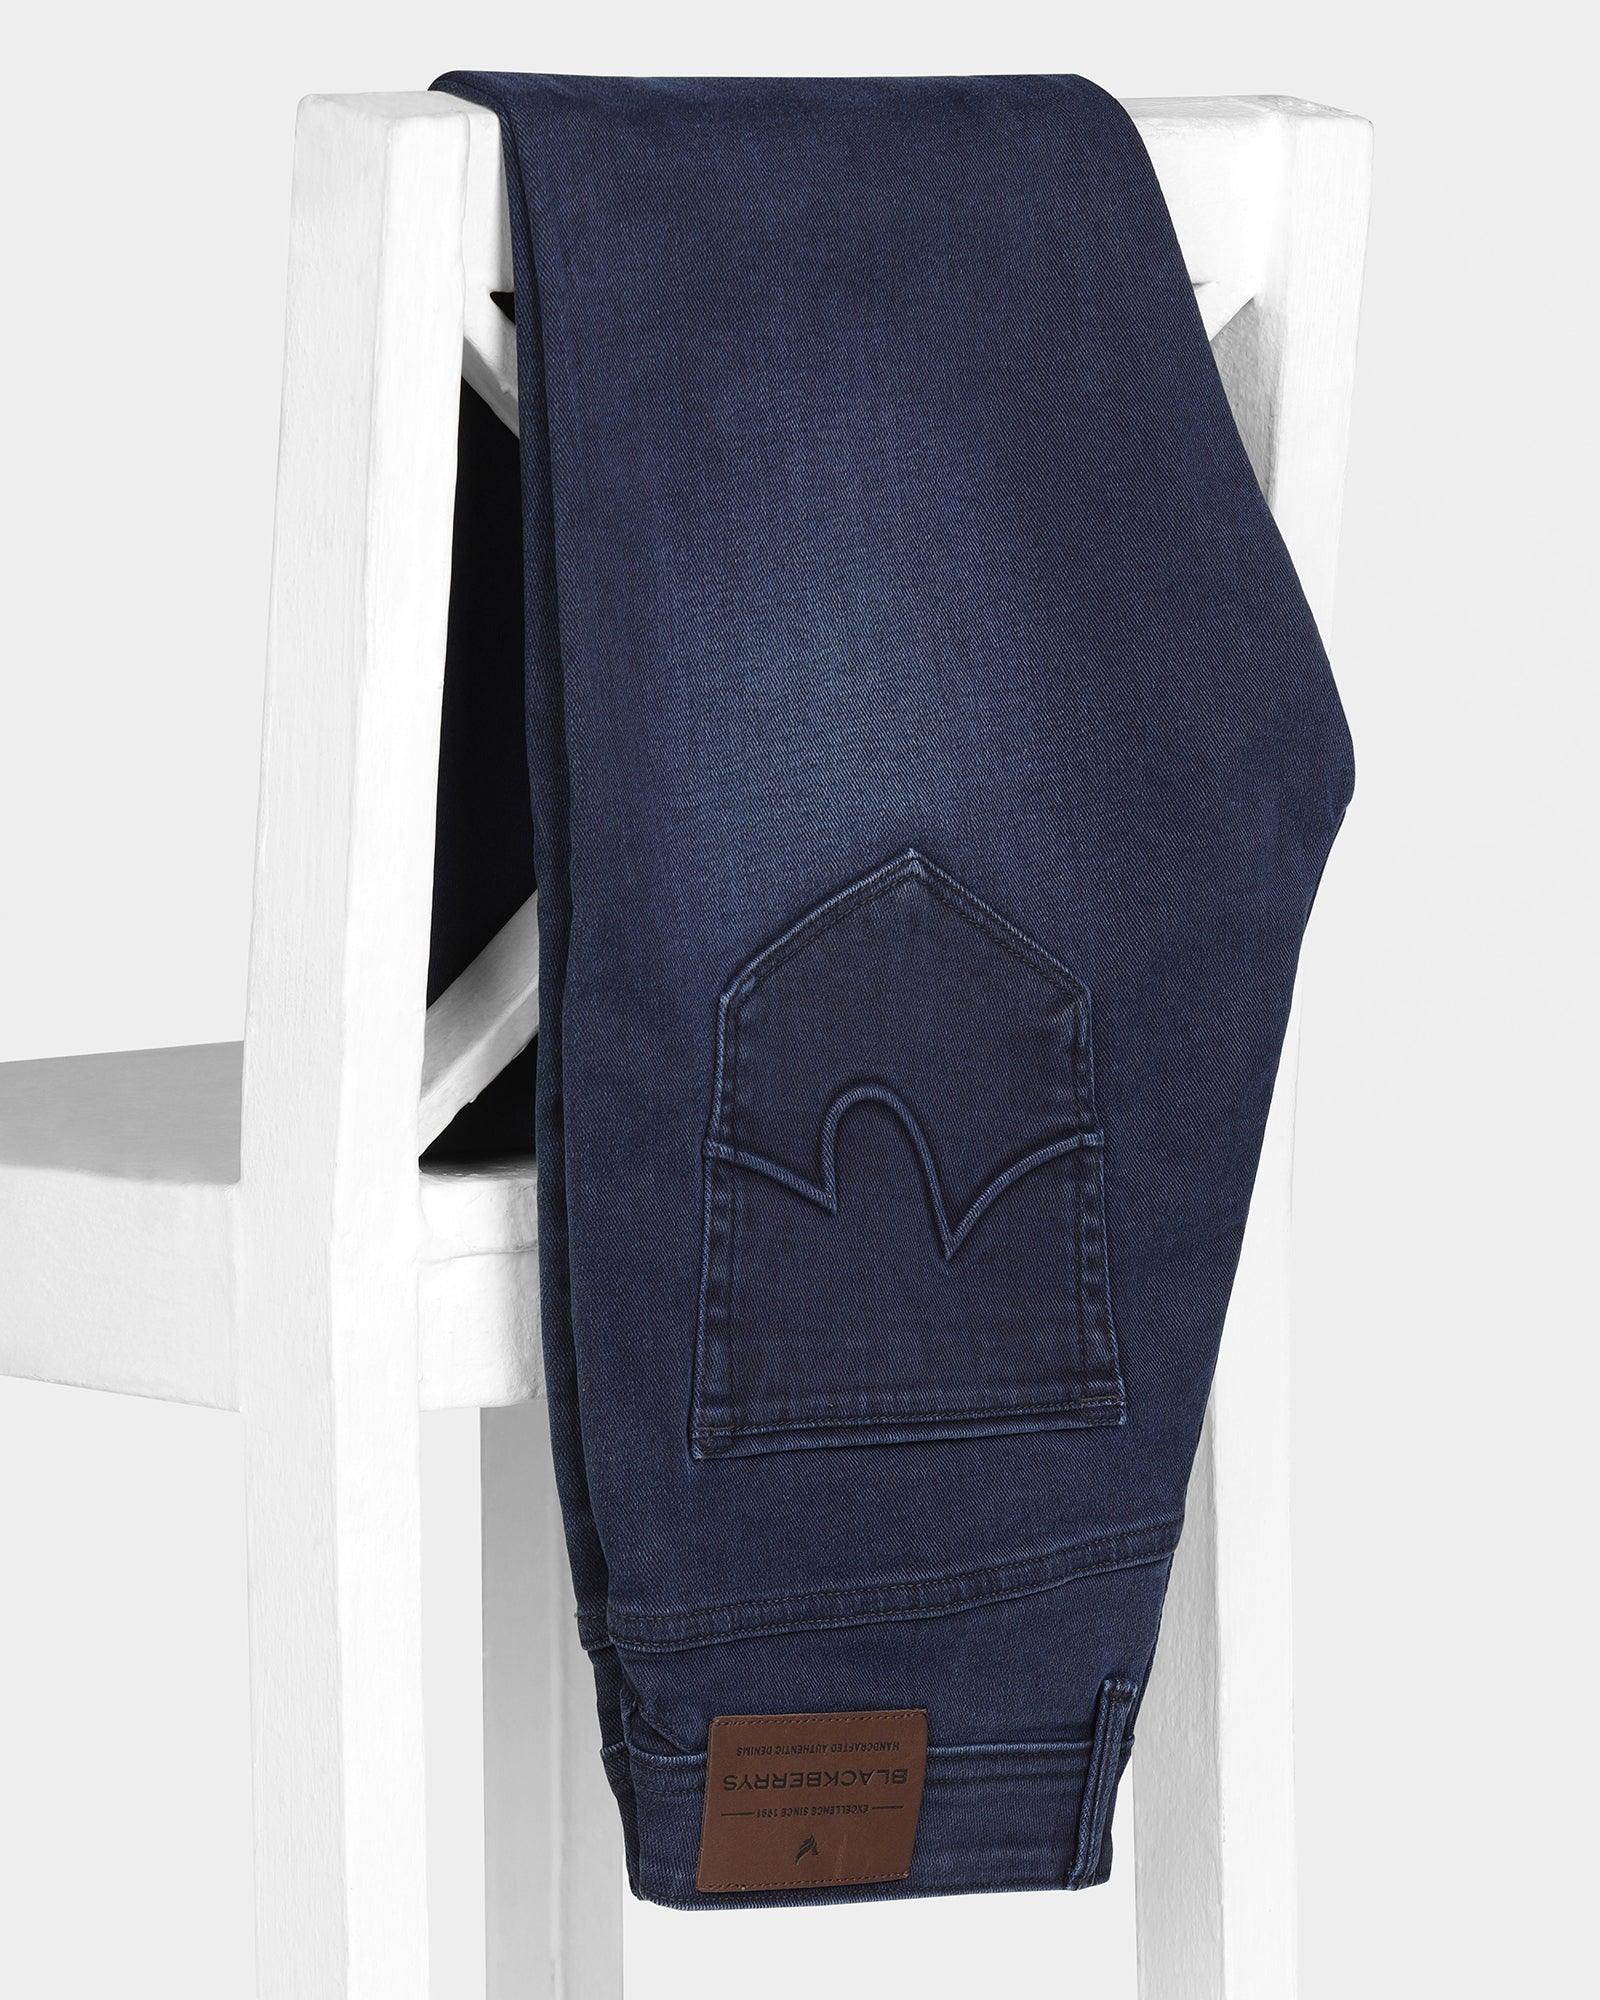 Slim Comfort Buff Fit Indigo Blue Textured Jeans - Rex